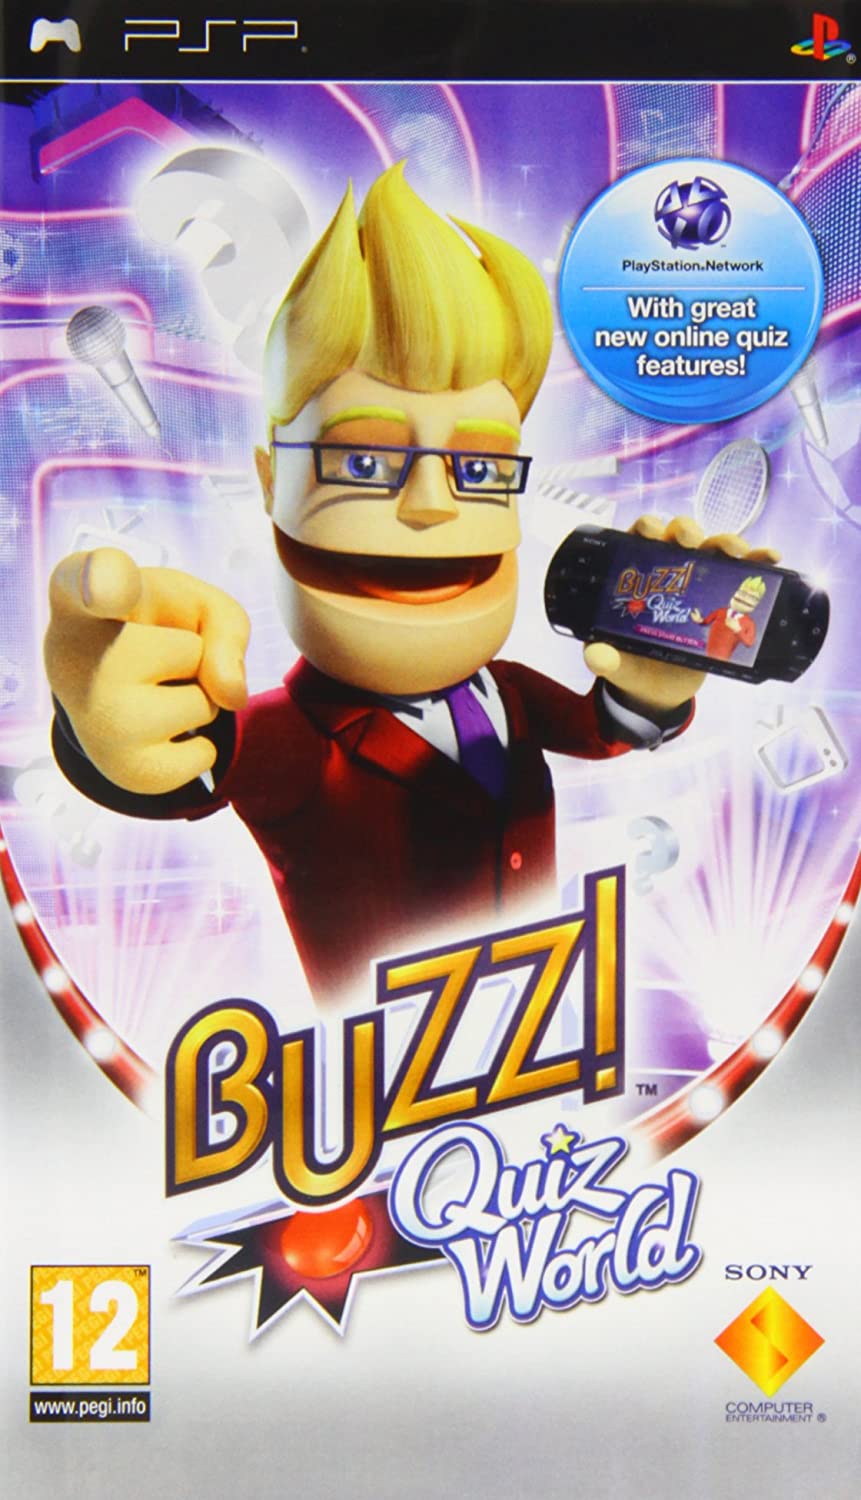 Buzz Quiz world (PSP)